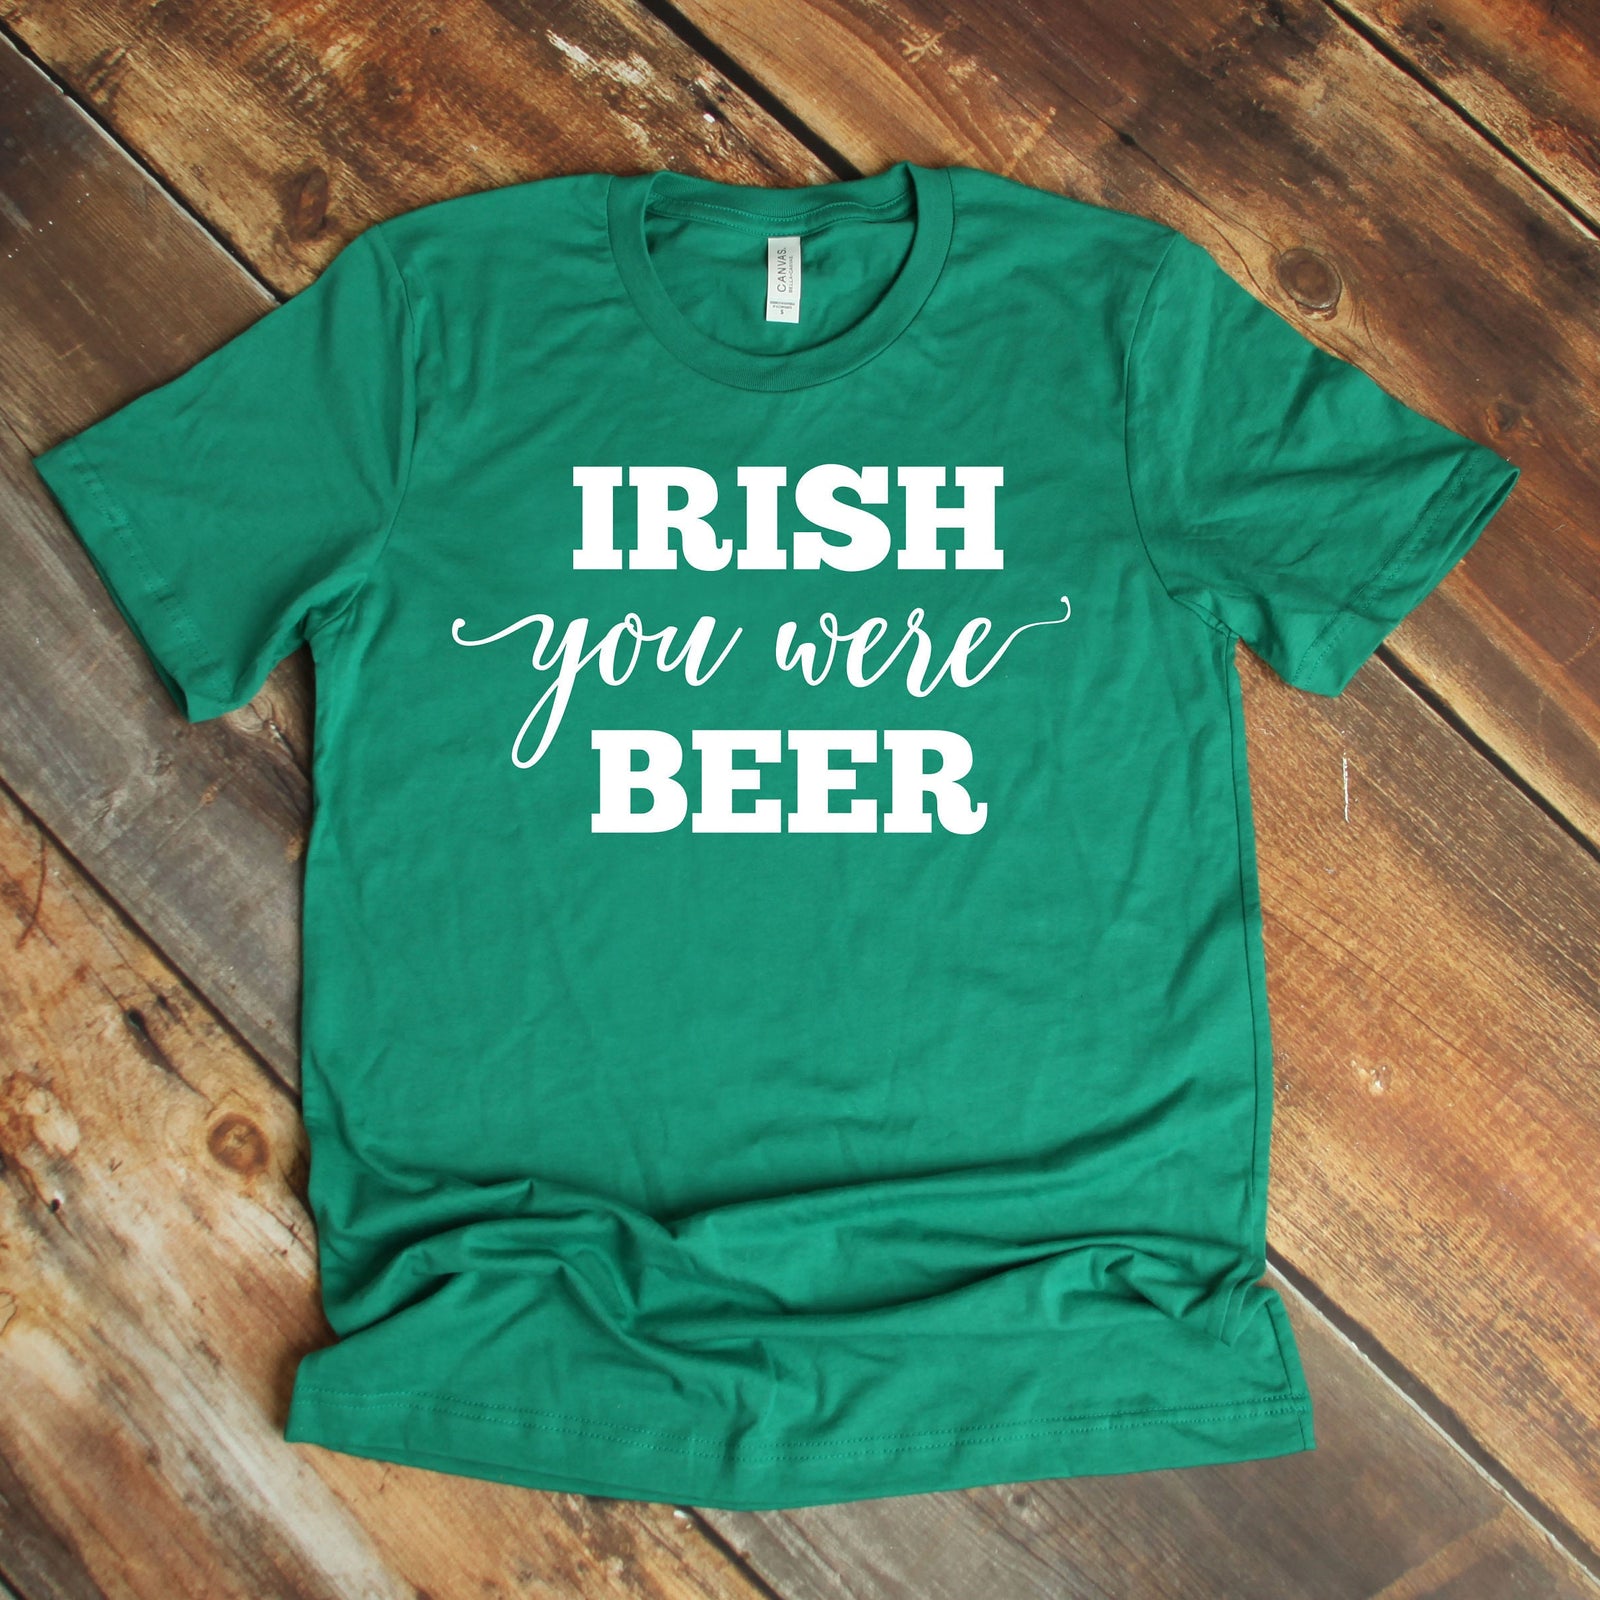 Irish You Were Beer T Shirt - Funny Beer Shirt - St. Patrick's Day Shirt - Saint Patty's Day Humor Shirt